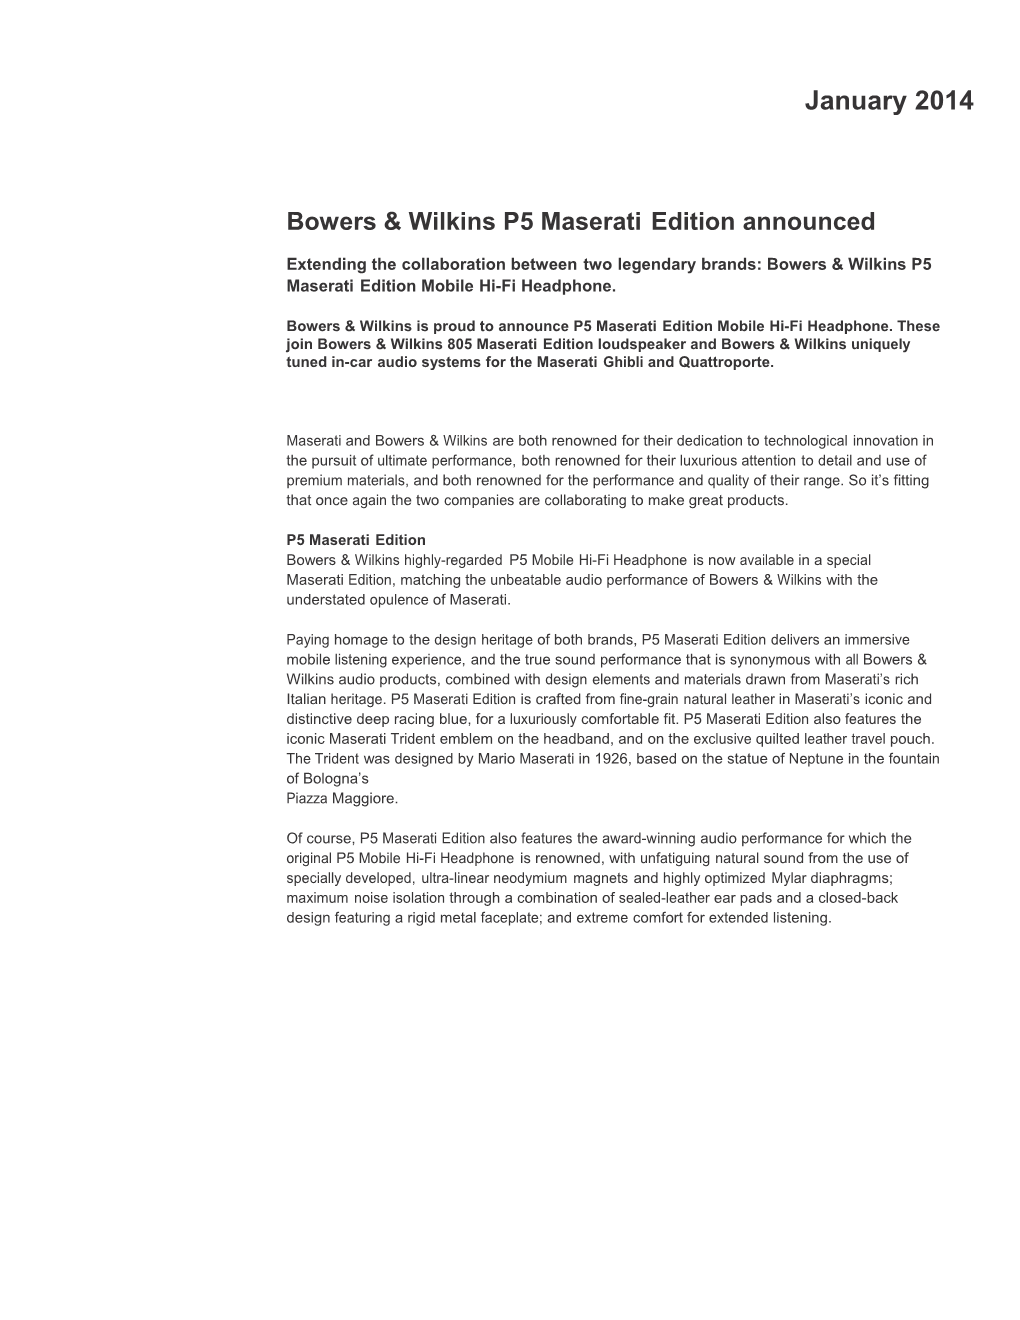 Bowers & Wilkins P5 Maserati Edition Announced